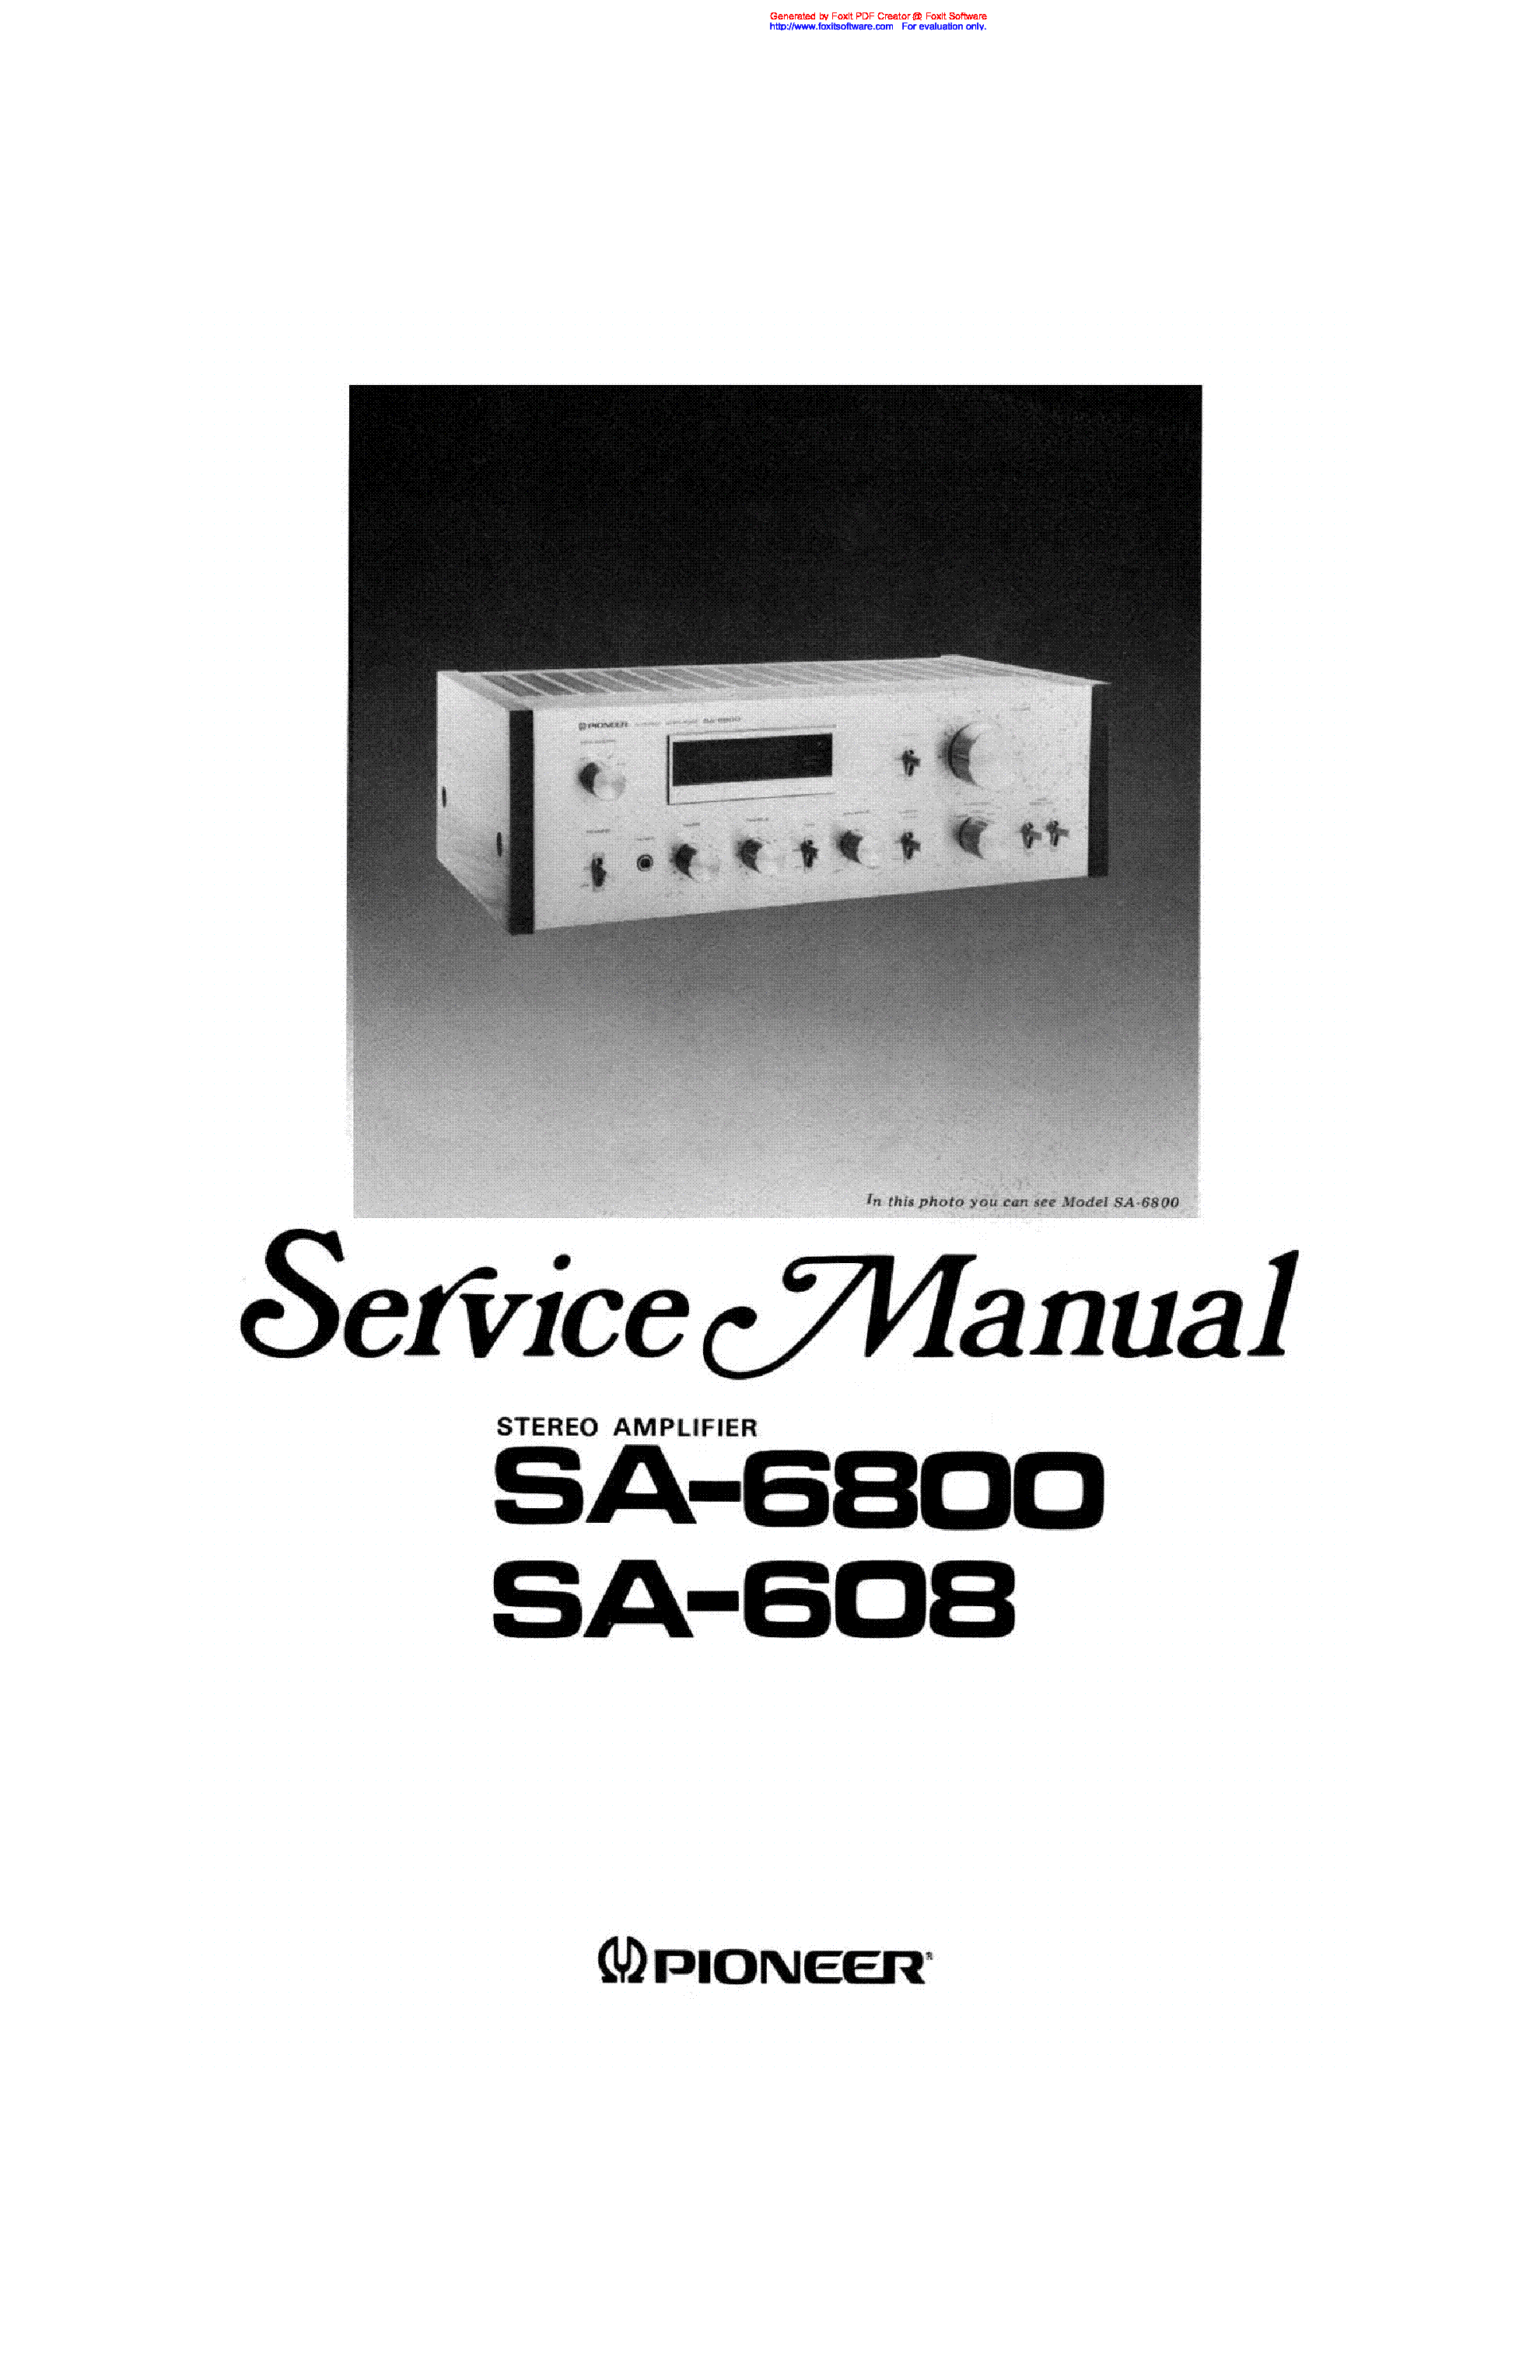 PIONEER SA-608 6800 SM service manual (1st page)